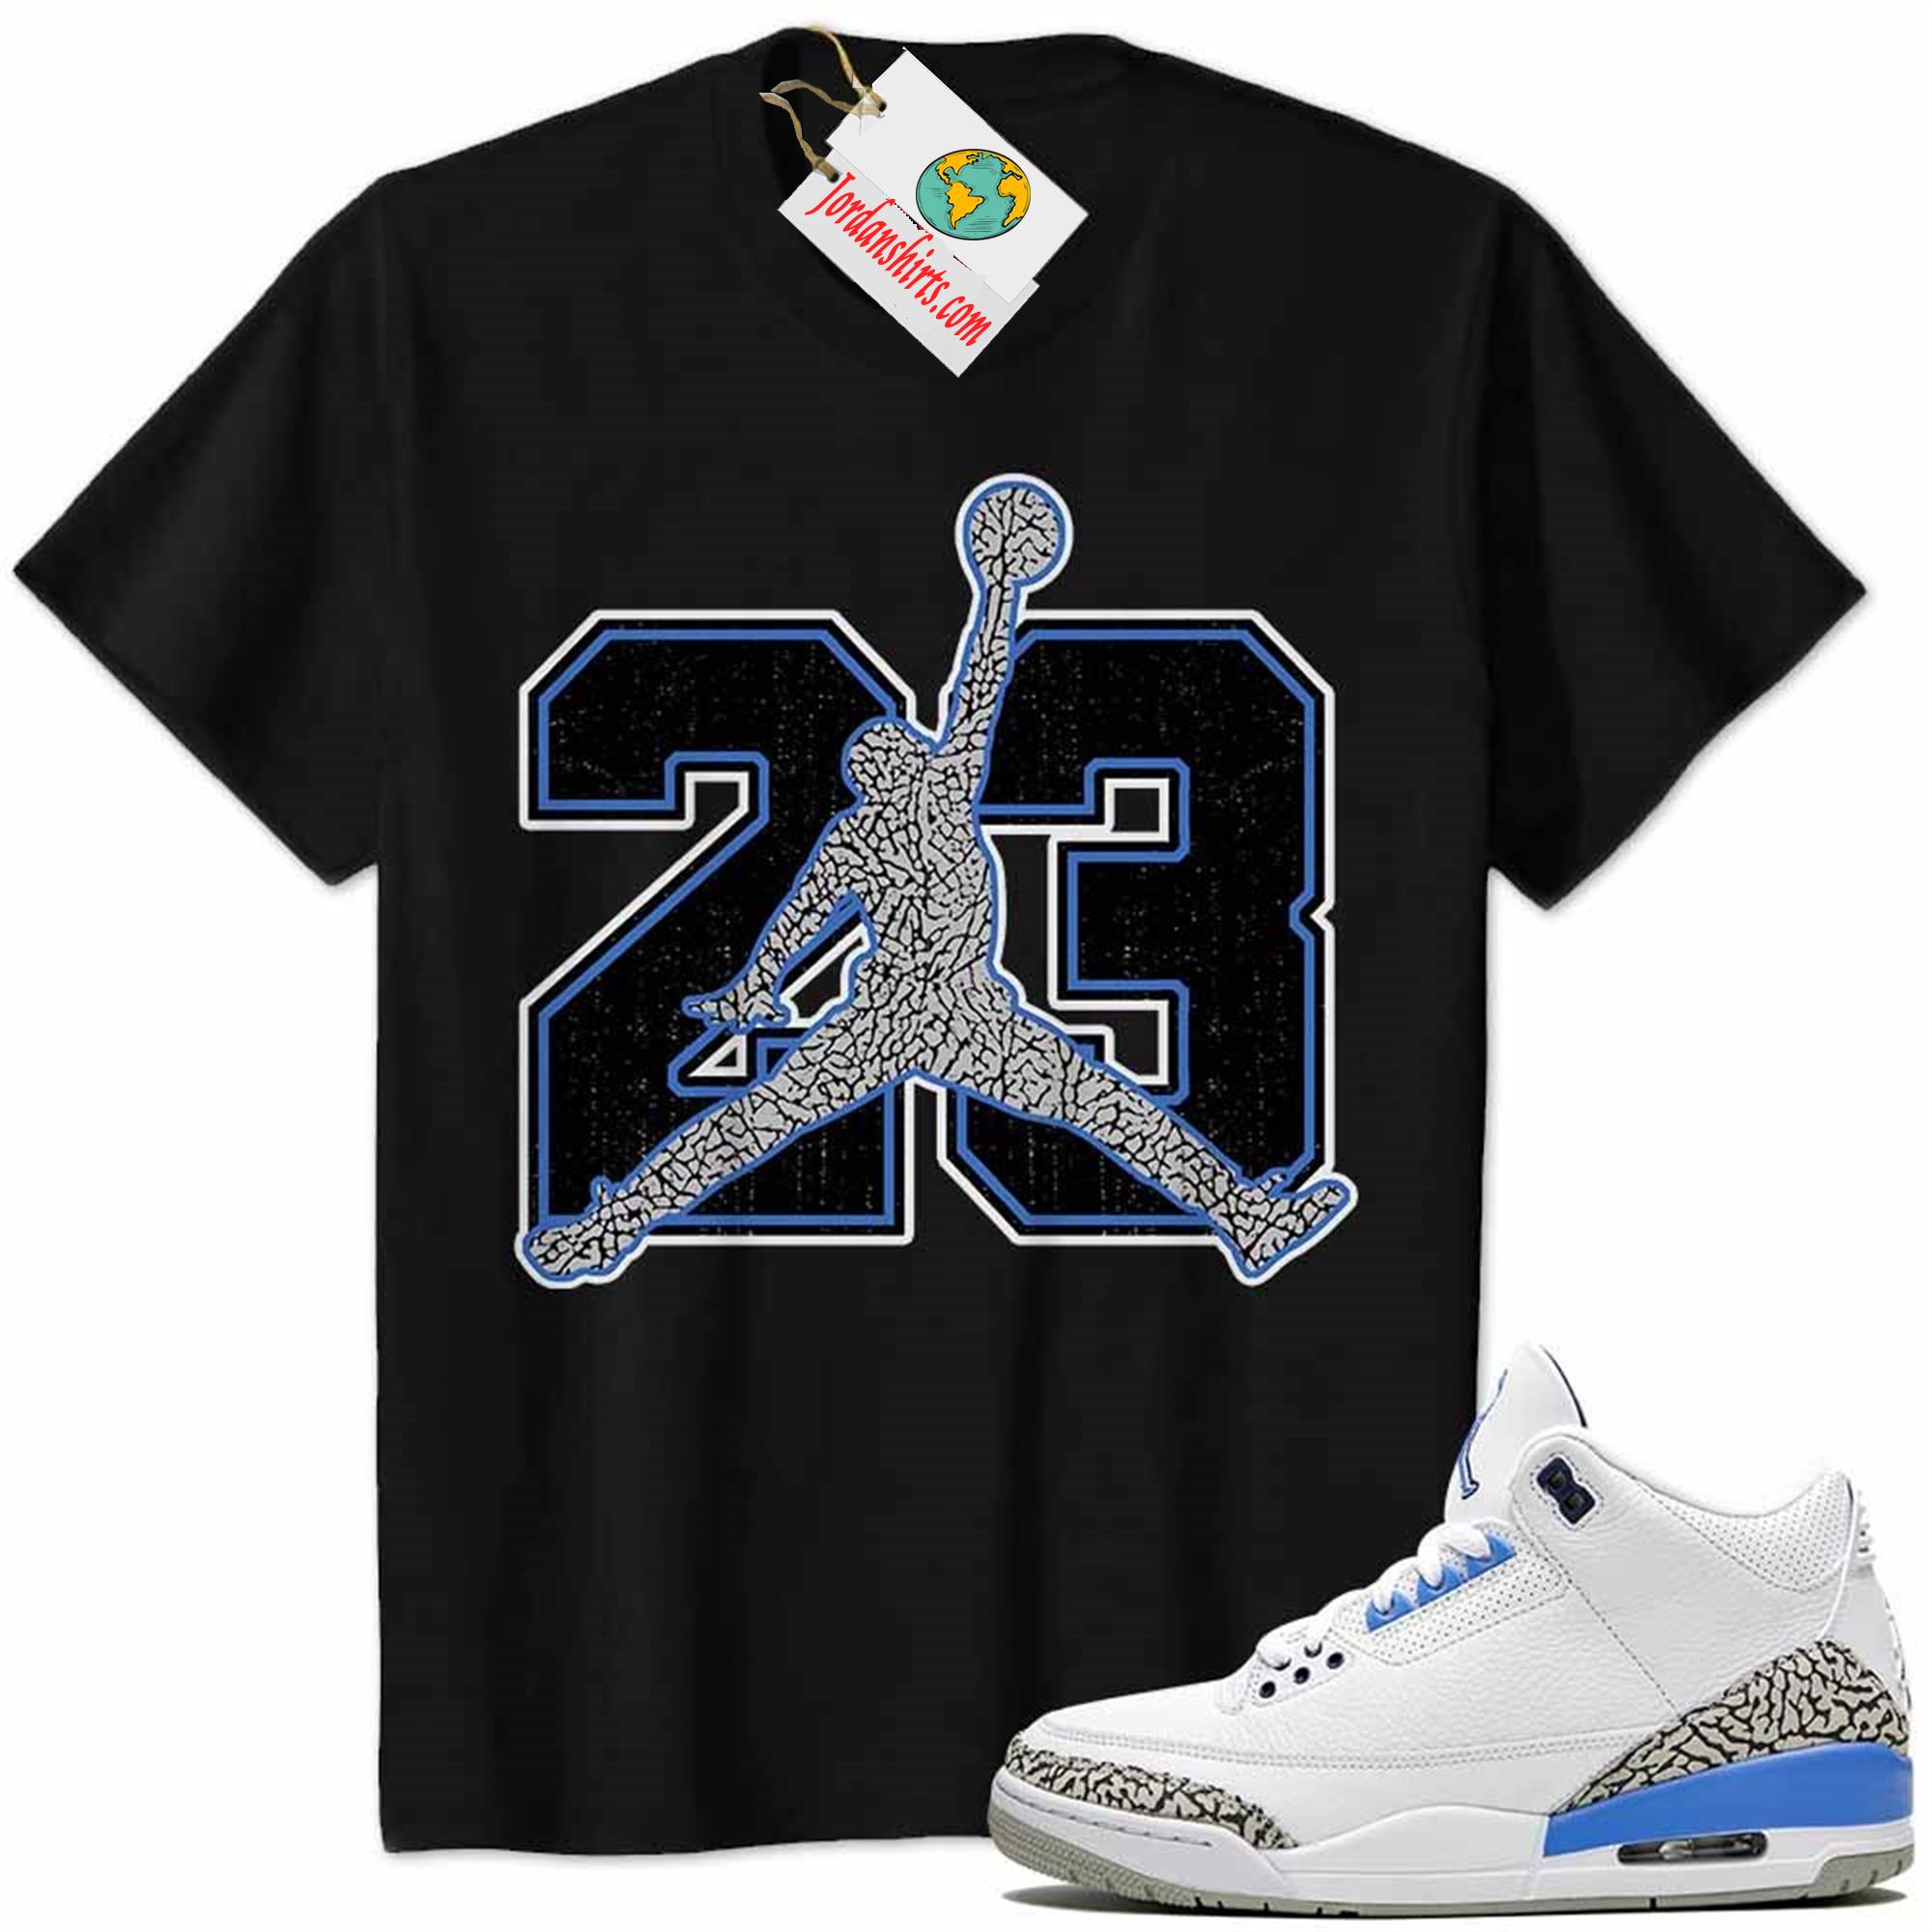 Jordan 3 Shirt, Jordan 3 Unc Shirt Jumpman No23 Black Plus Size Up To 5xl